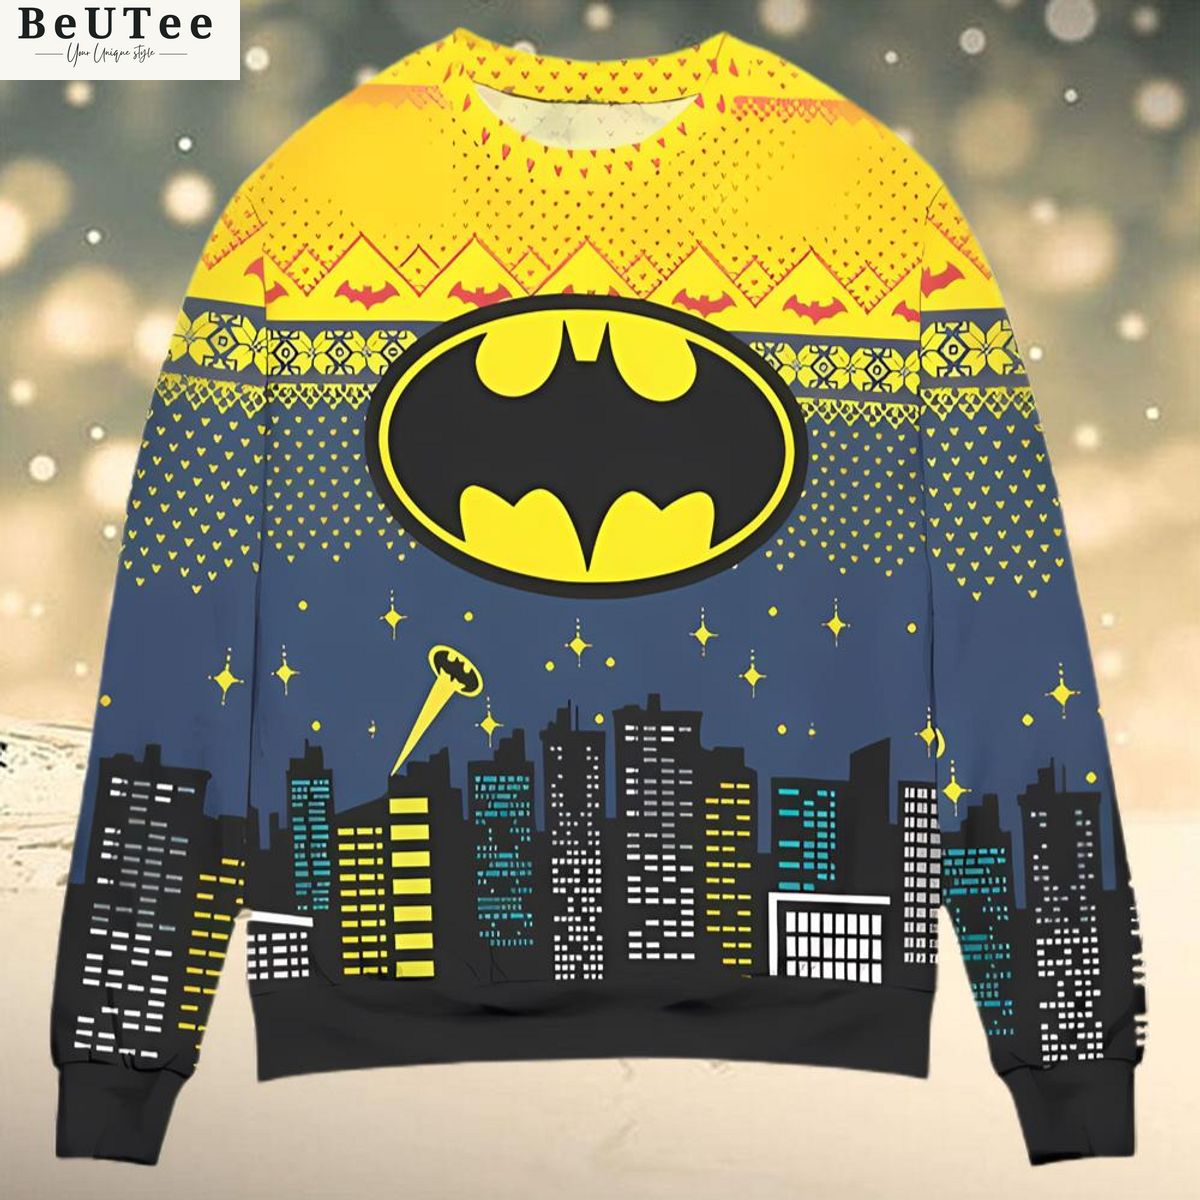 batman gotham city nights ugly christmas knitted sweater jumper 1 SQ1Fk.jpg